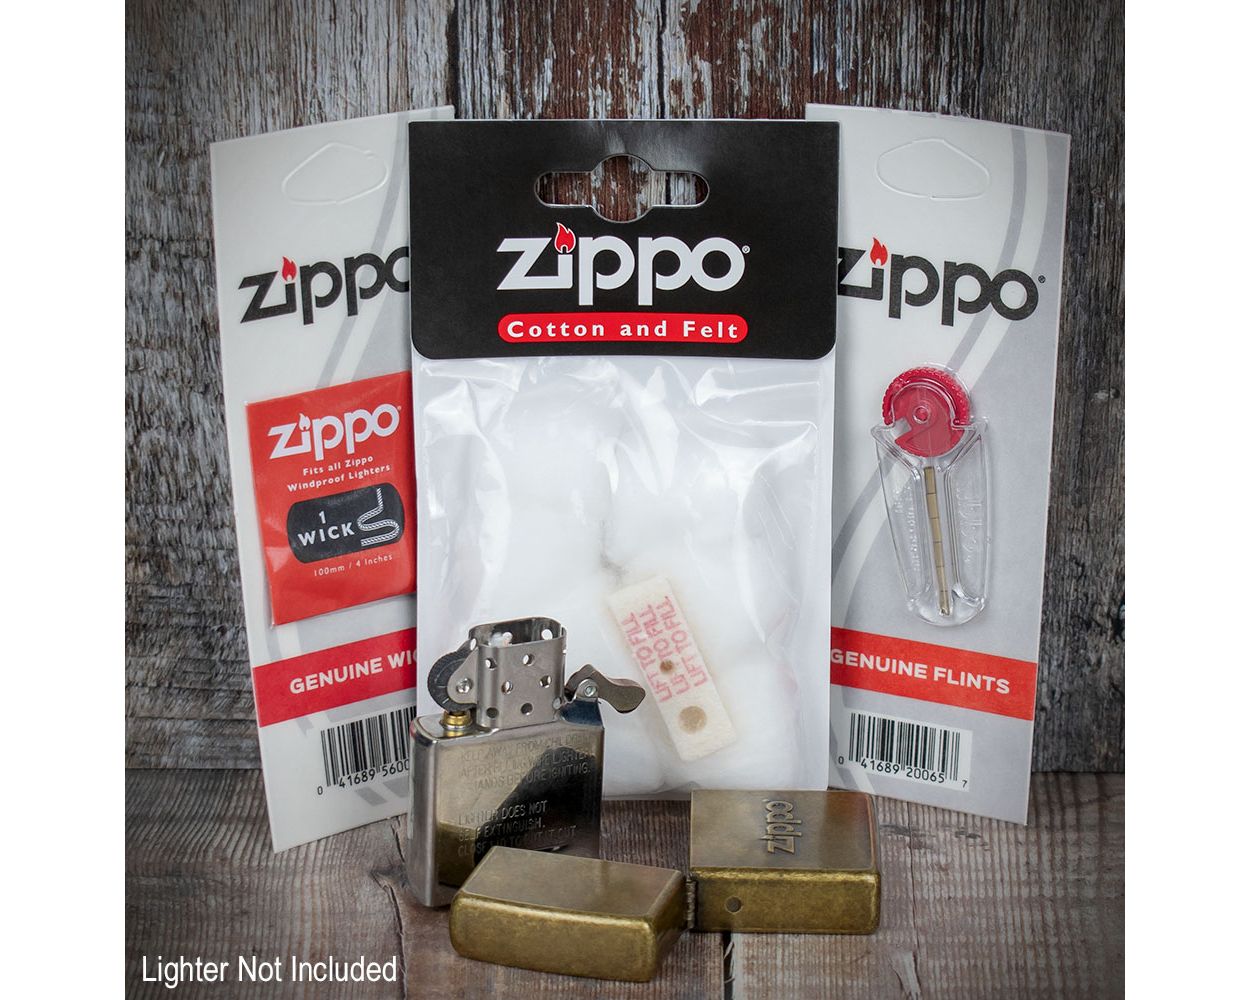 Zippo Lighter Wick & Flint Card Value Pack, Black|Red